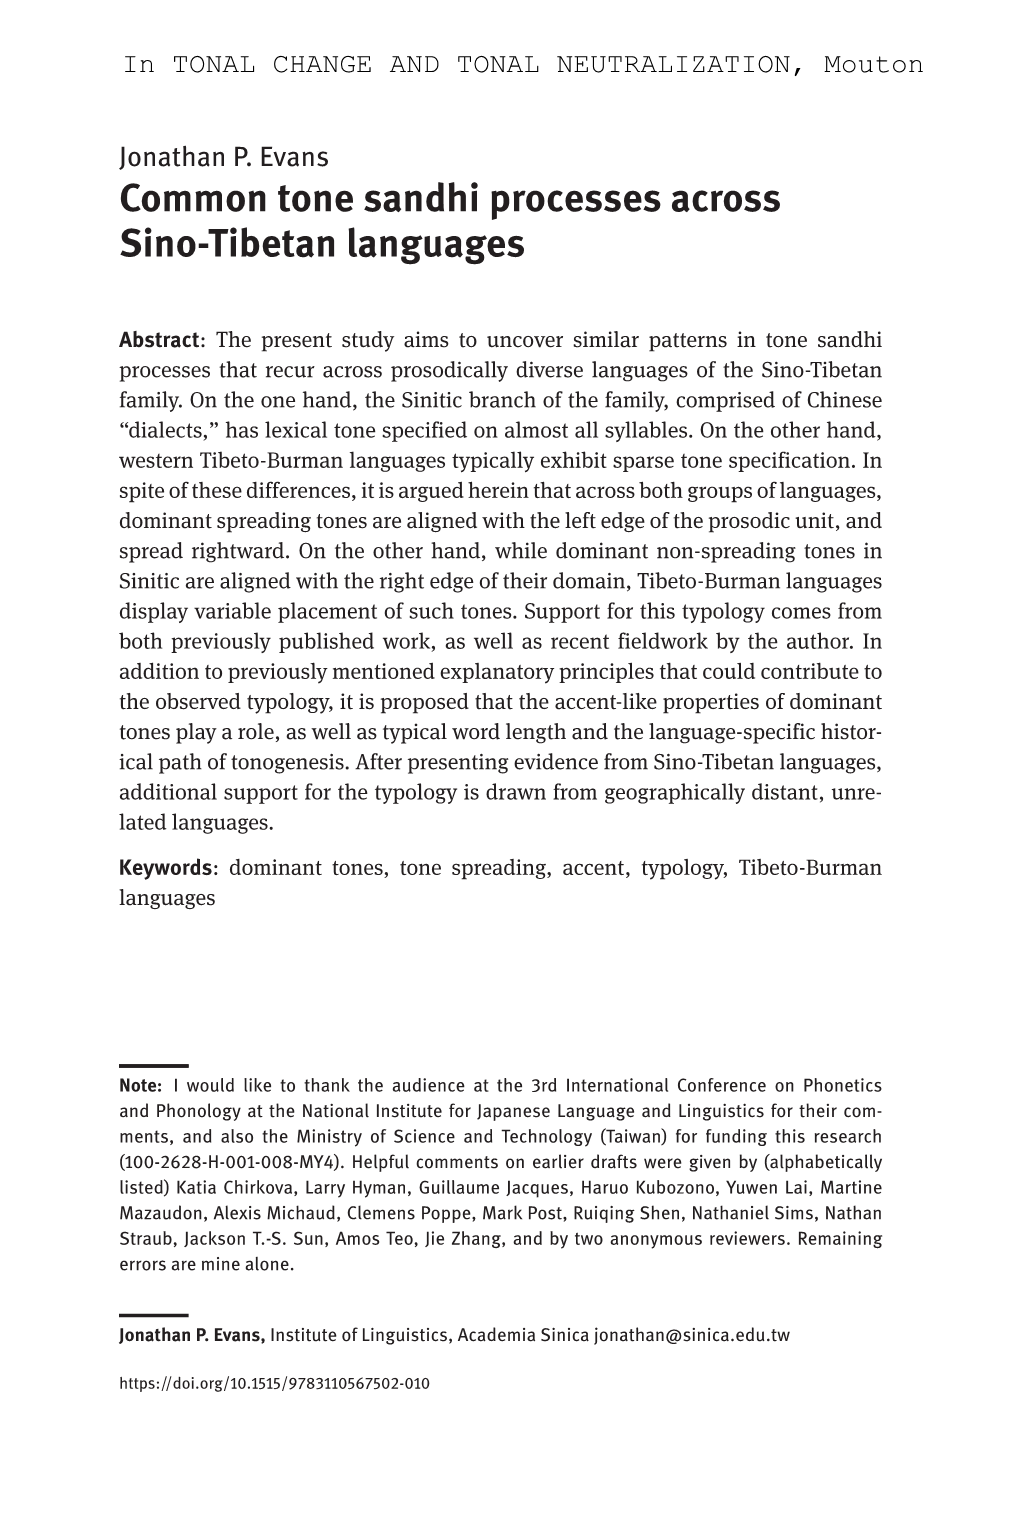 Common Tone Sandhi Processes Across Sino-Tibetan Languages